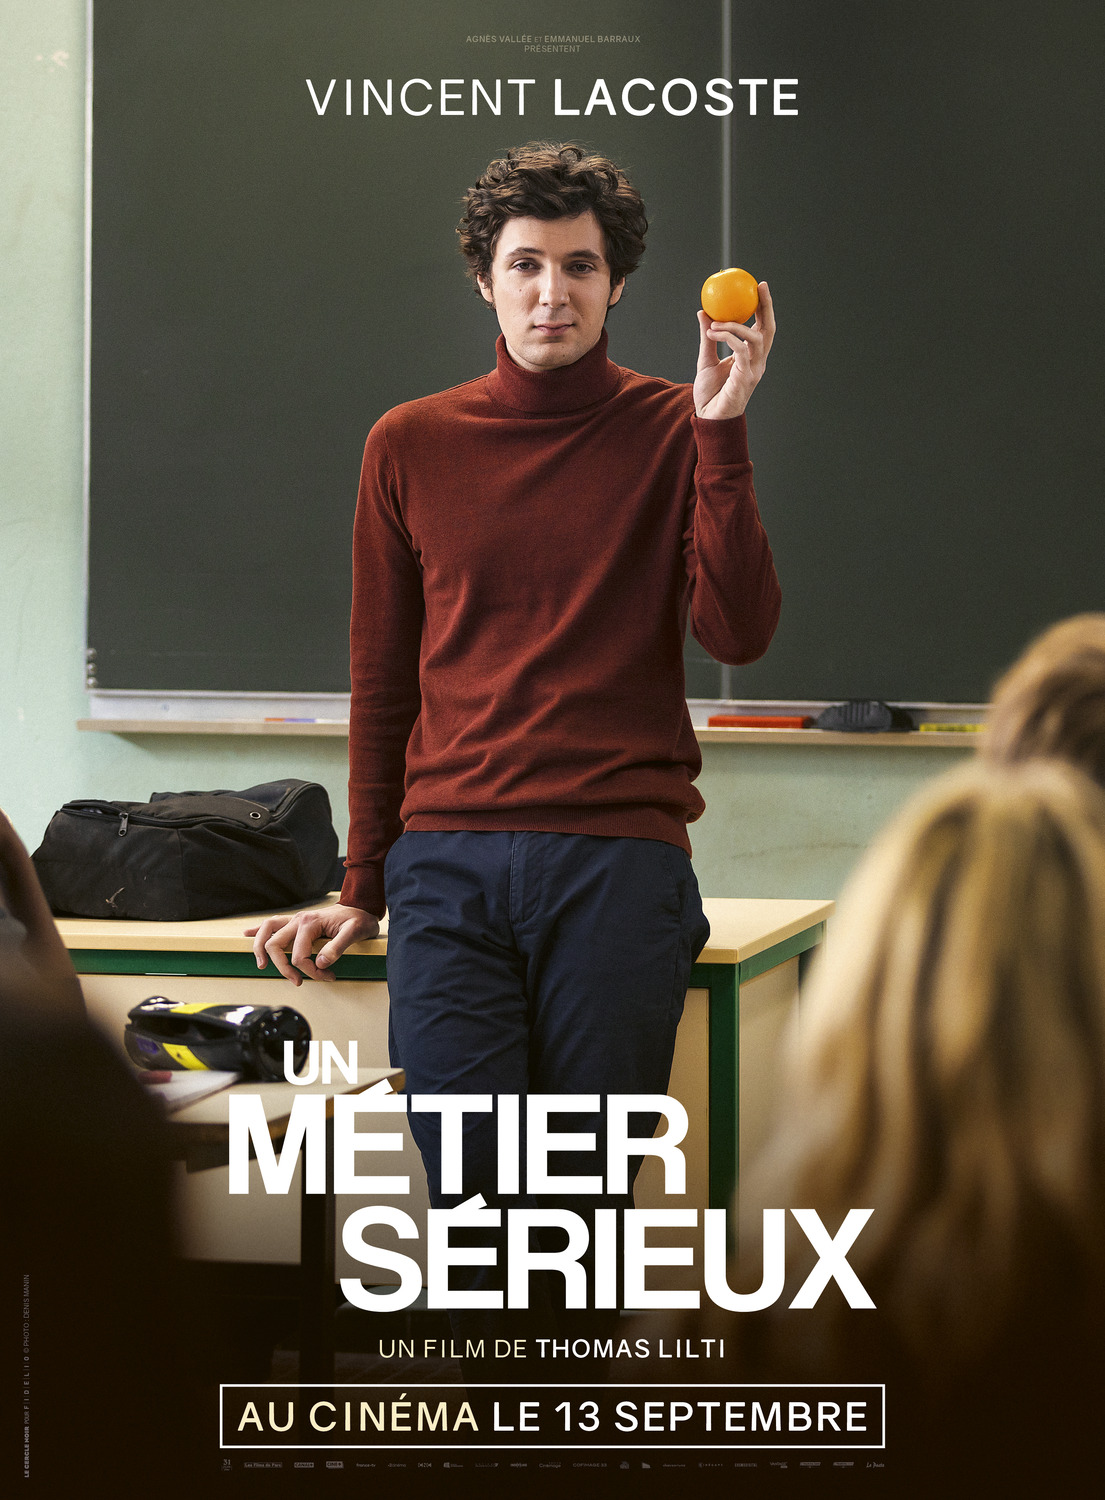 Extra Large Movie Poster Image for Un métier sérieux (#5 of 7)